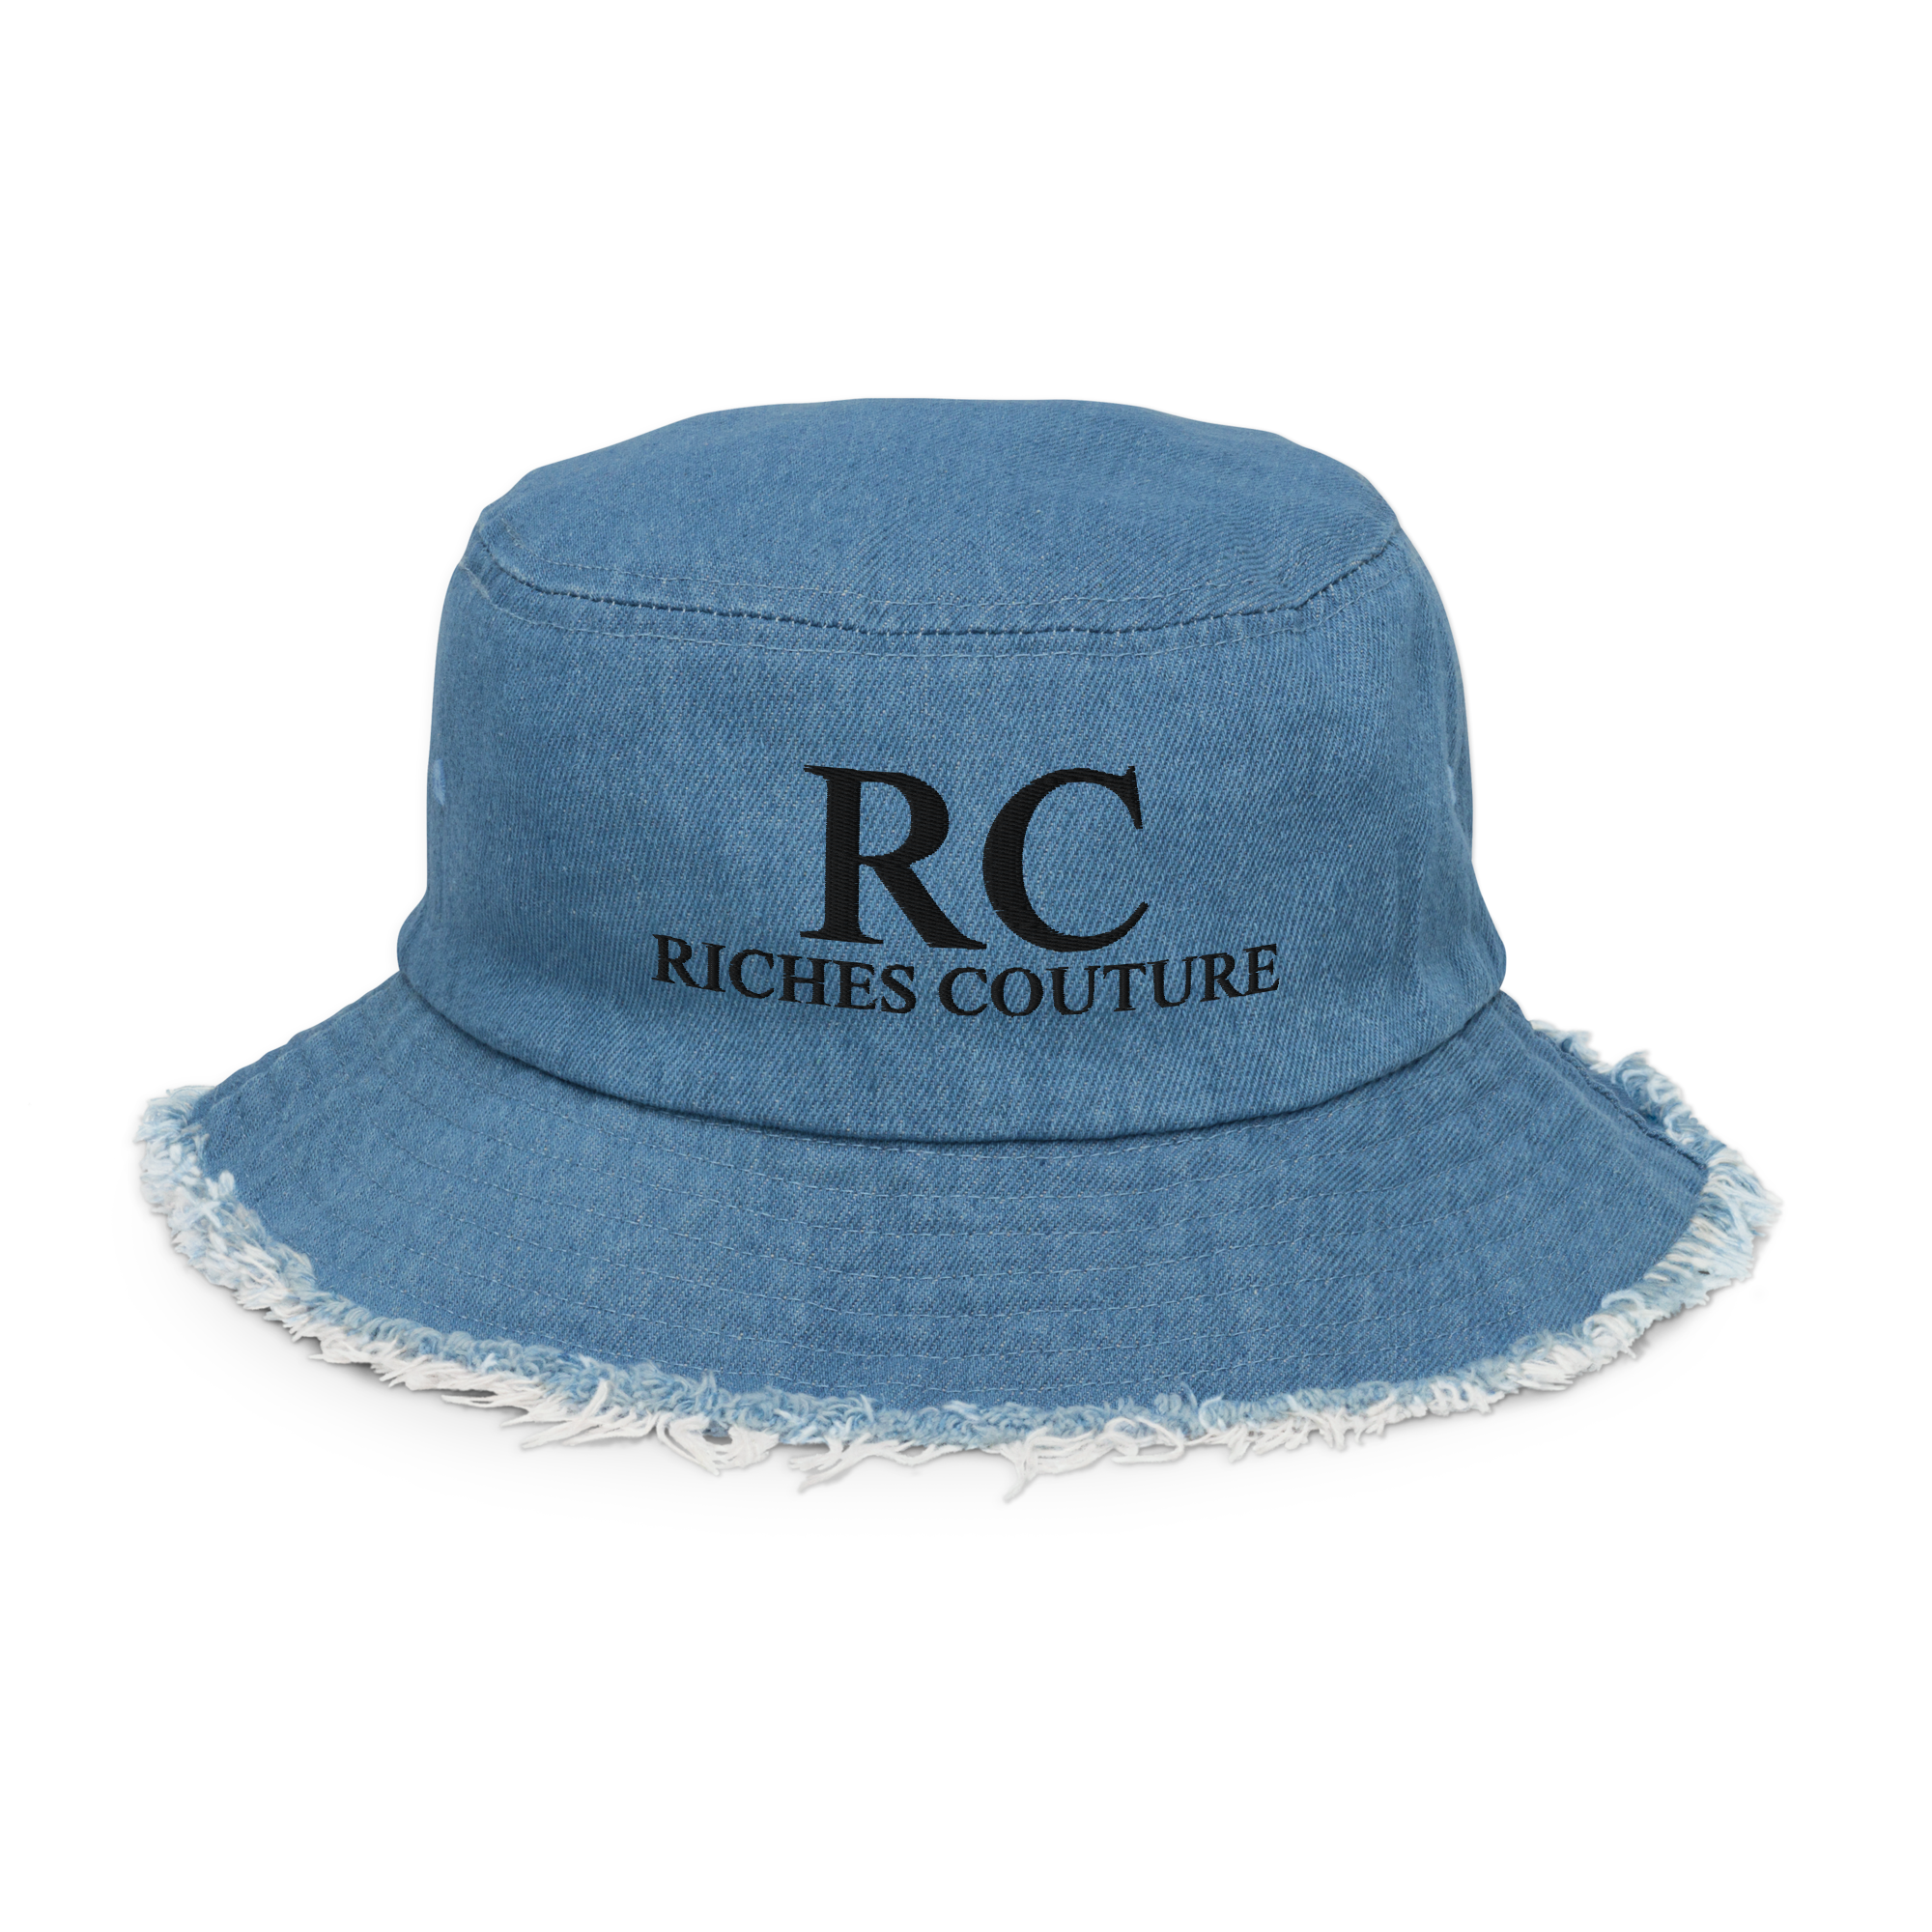 This Riches Couture Vintage Denim Bucket Hat